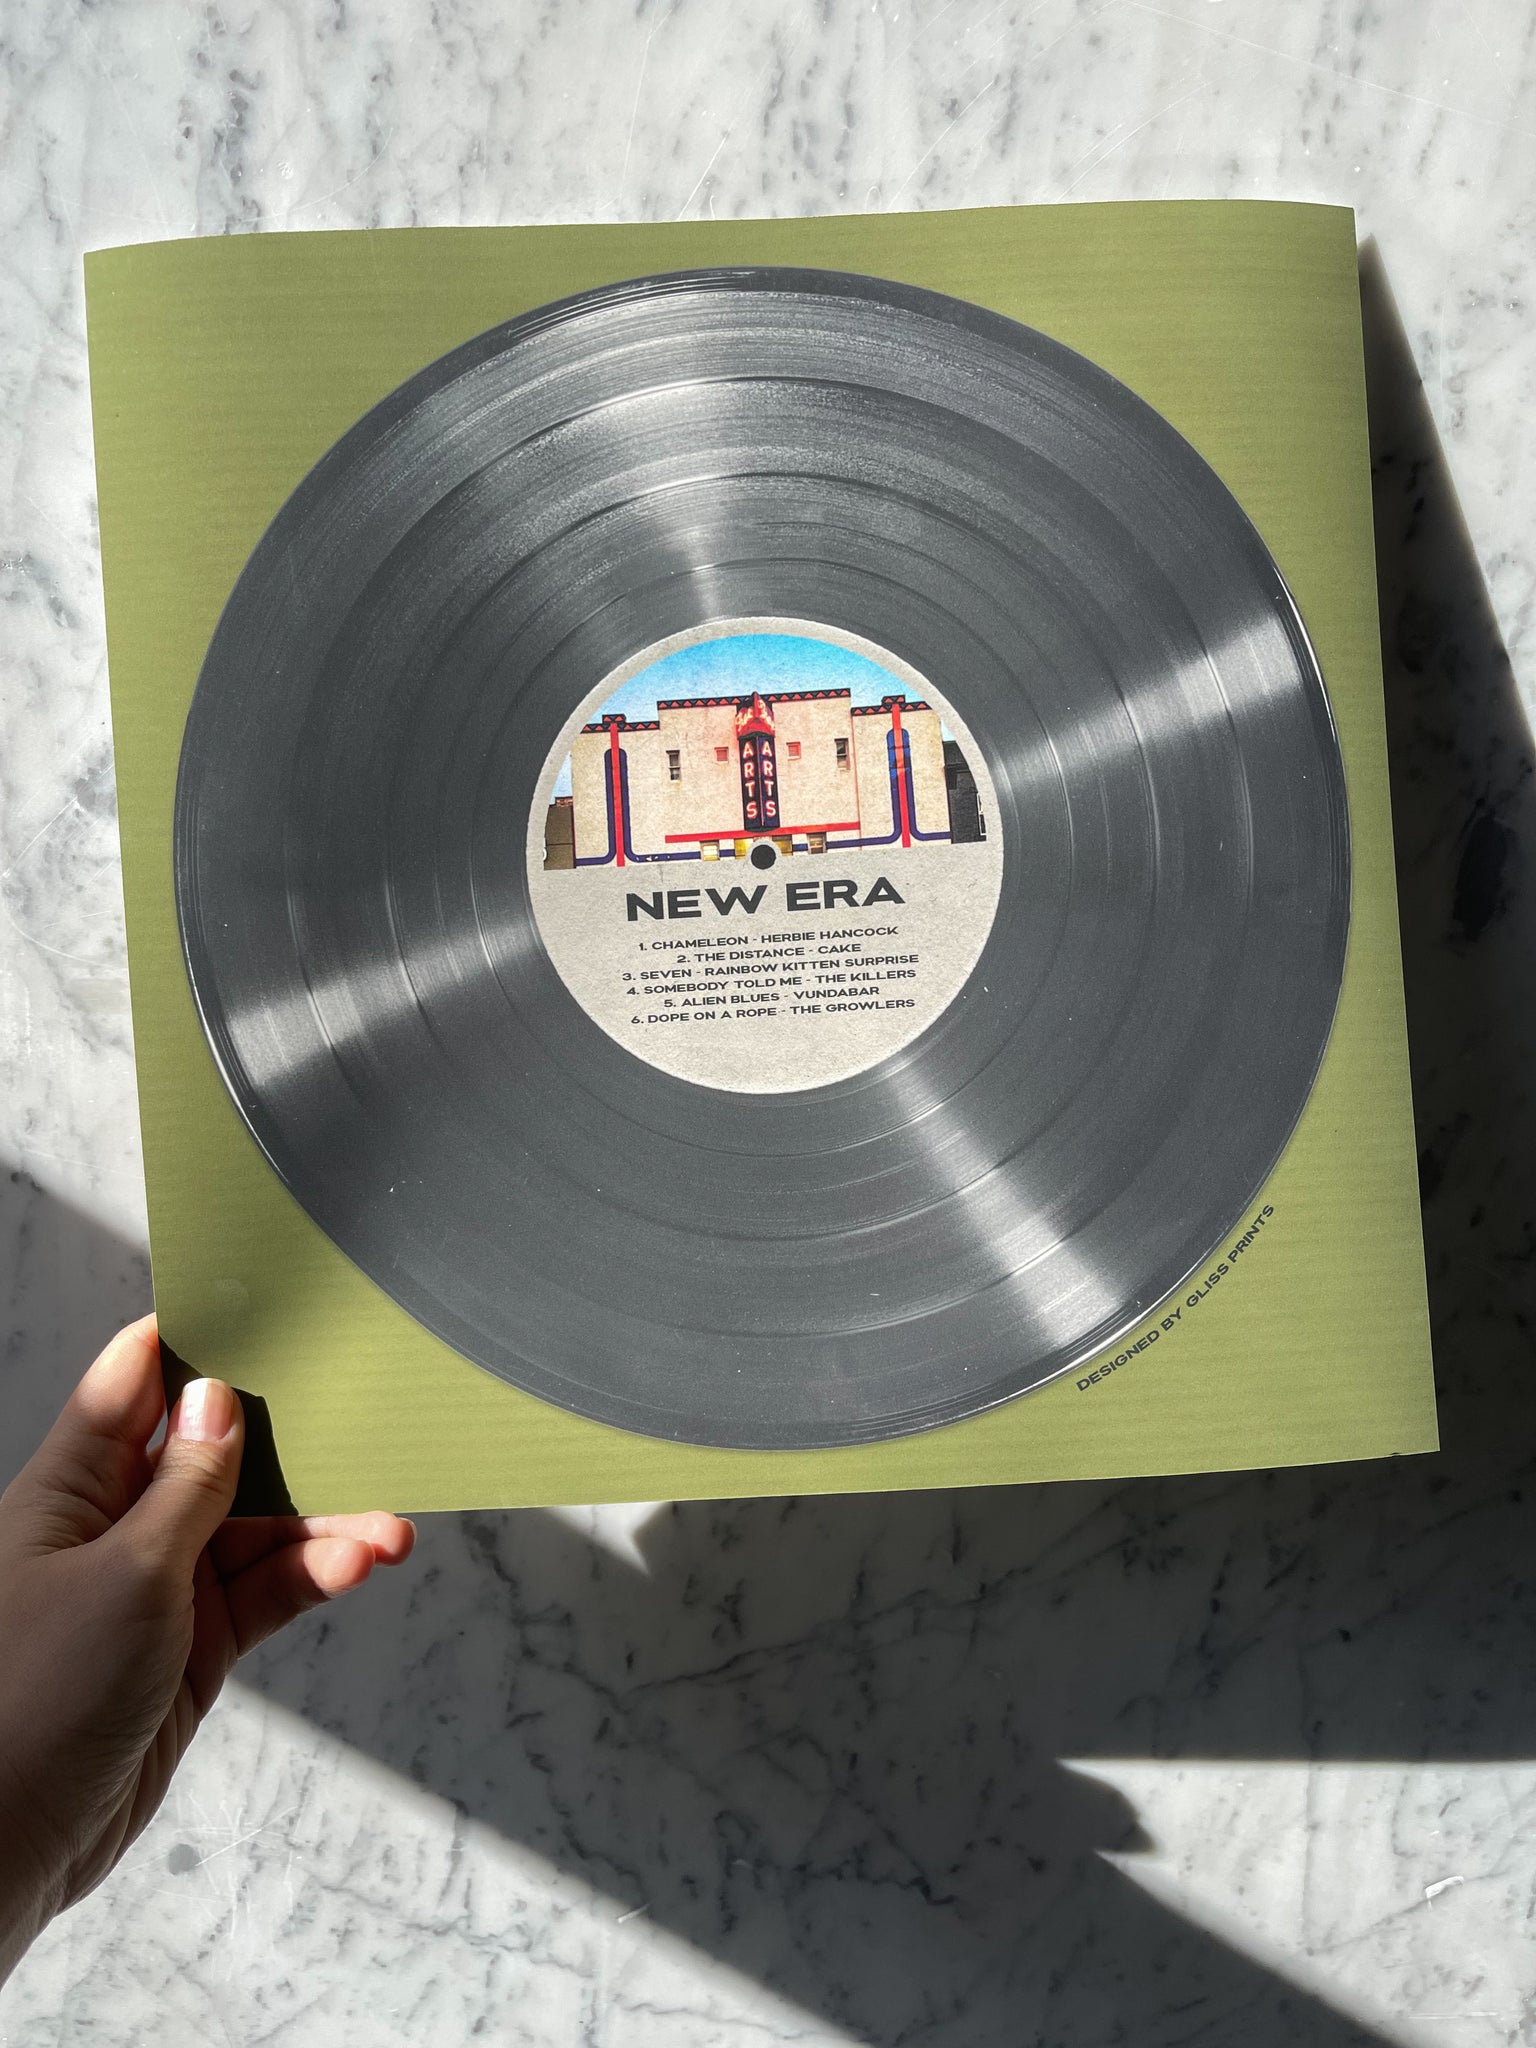 Custom Vinyl Record Square Print